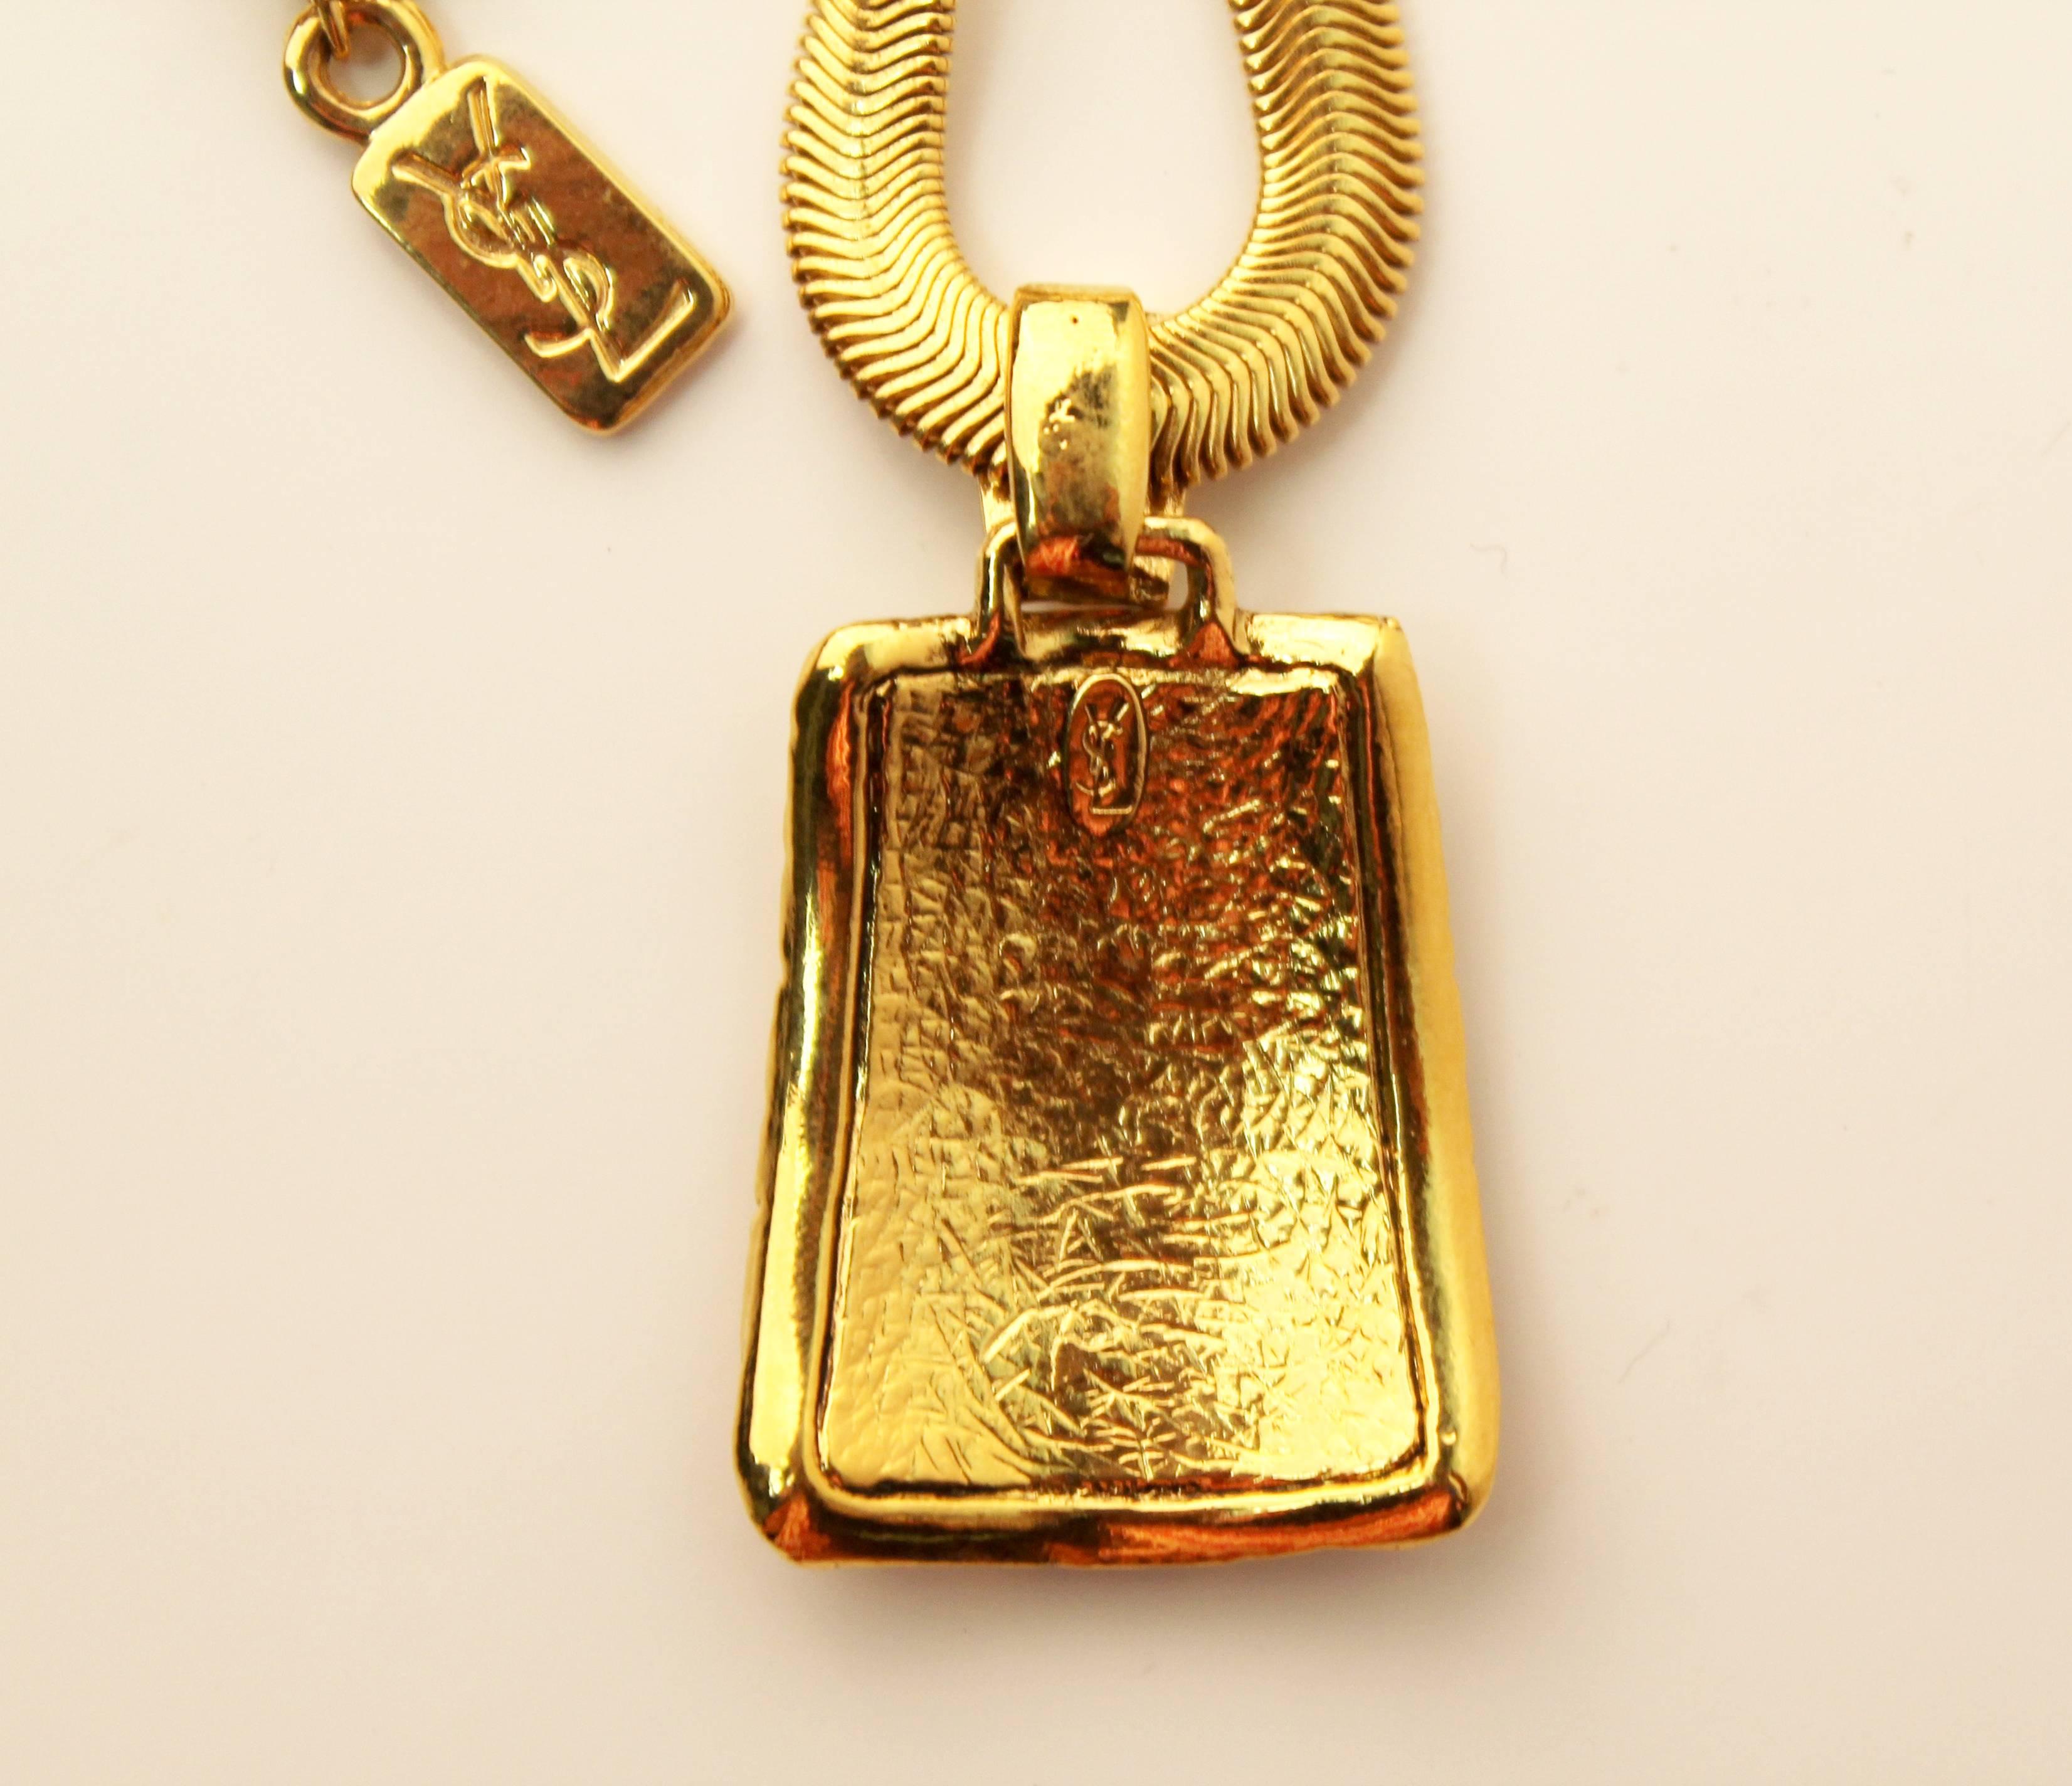 Etruscan Revival Vintage Yves Saint Laurent Gold Necklace with Crocodile Pendant For Sale